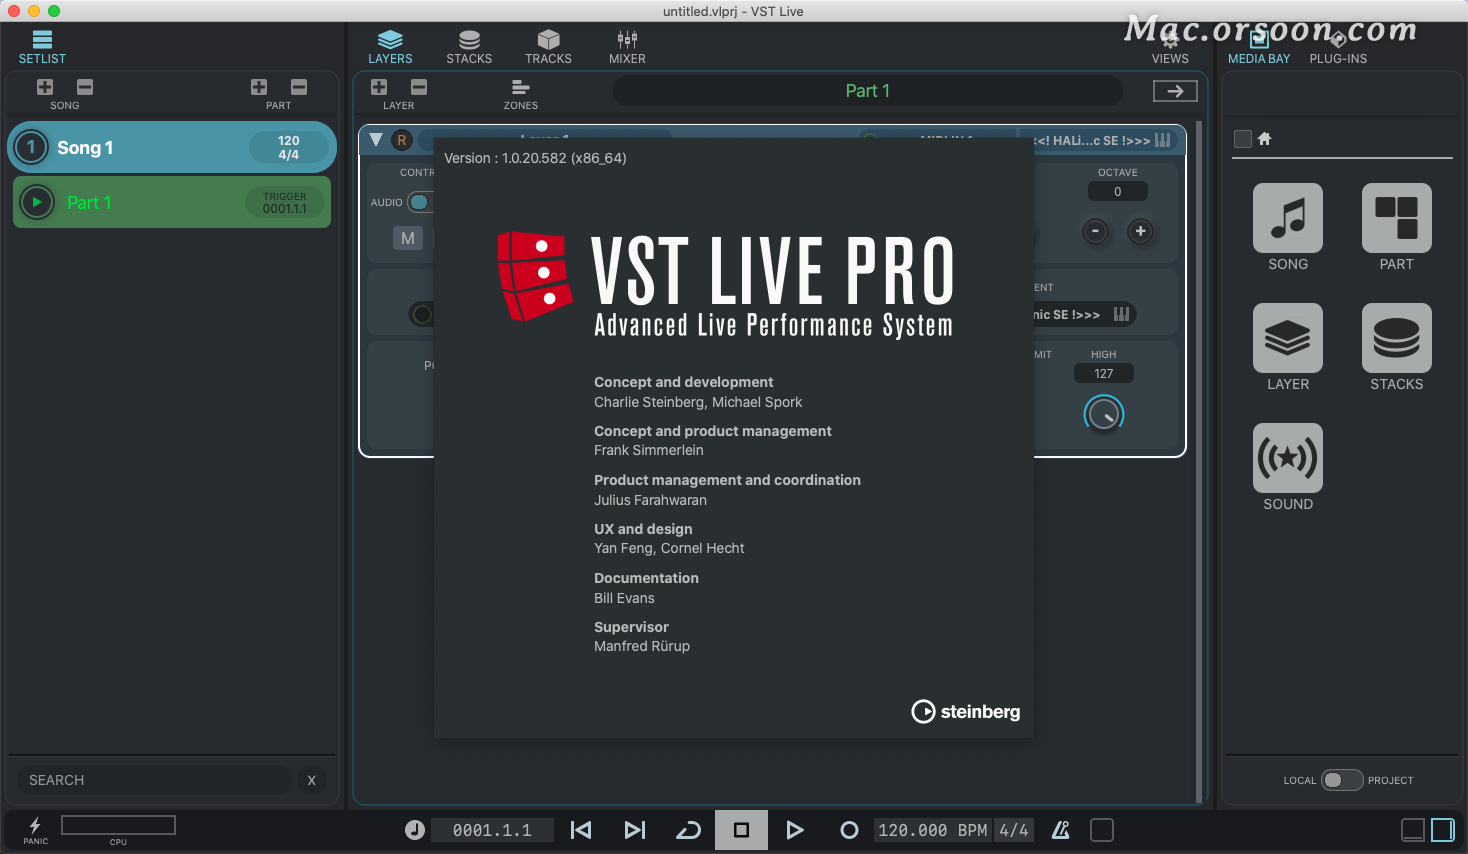 download the last version for mac Steinberg VST Live Pro 1.3